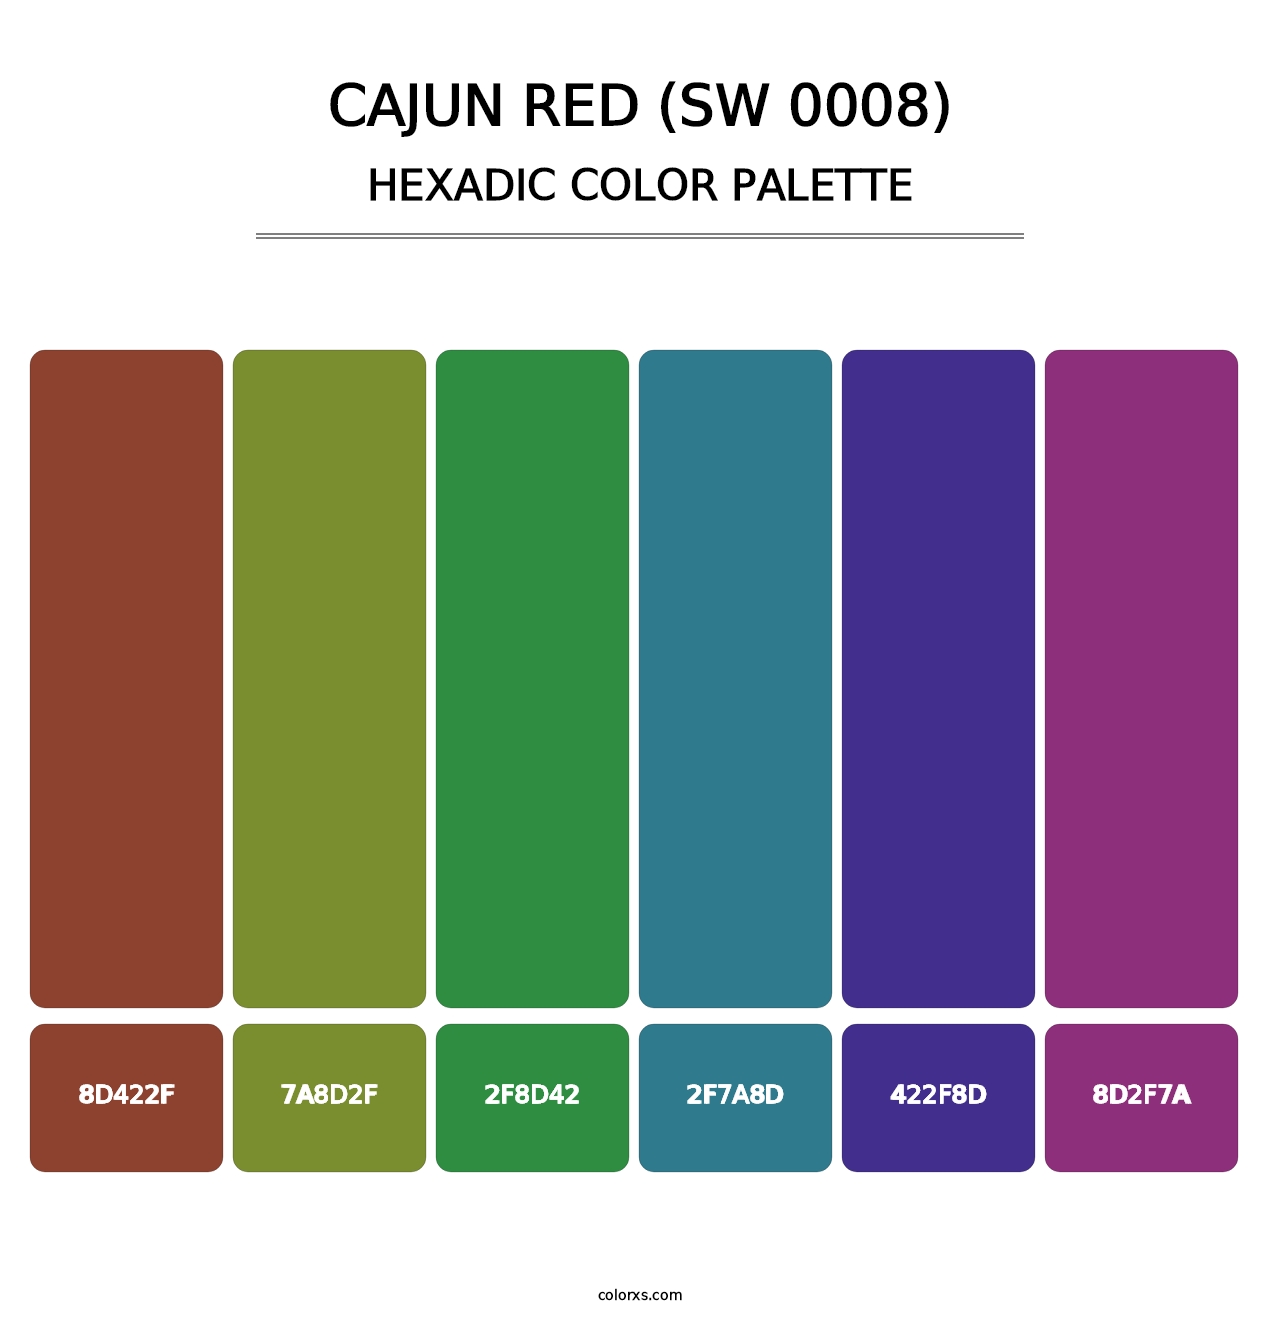 Cajun Red (SW 0008) - Hexadic Color Palette